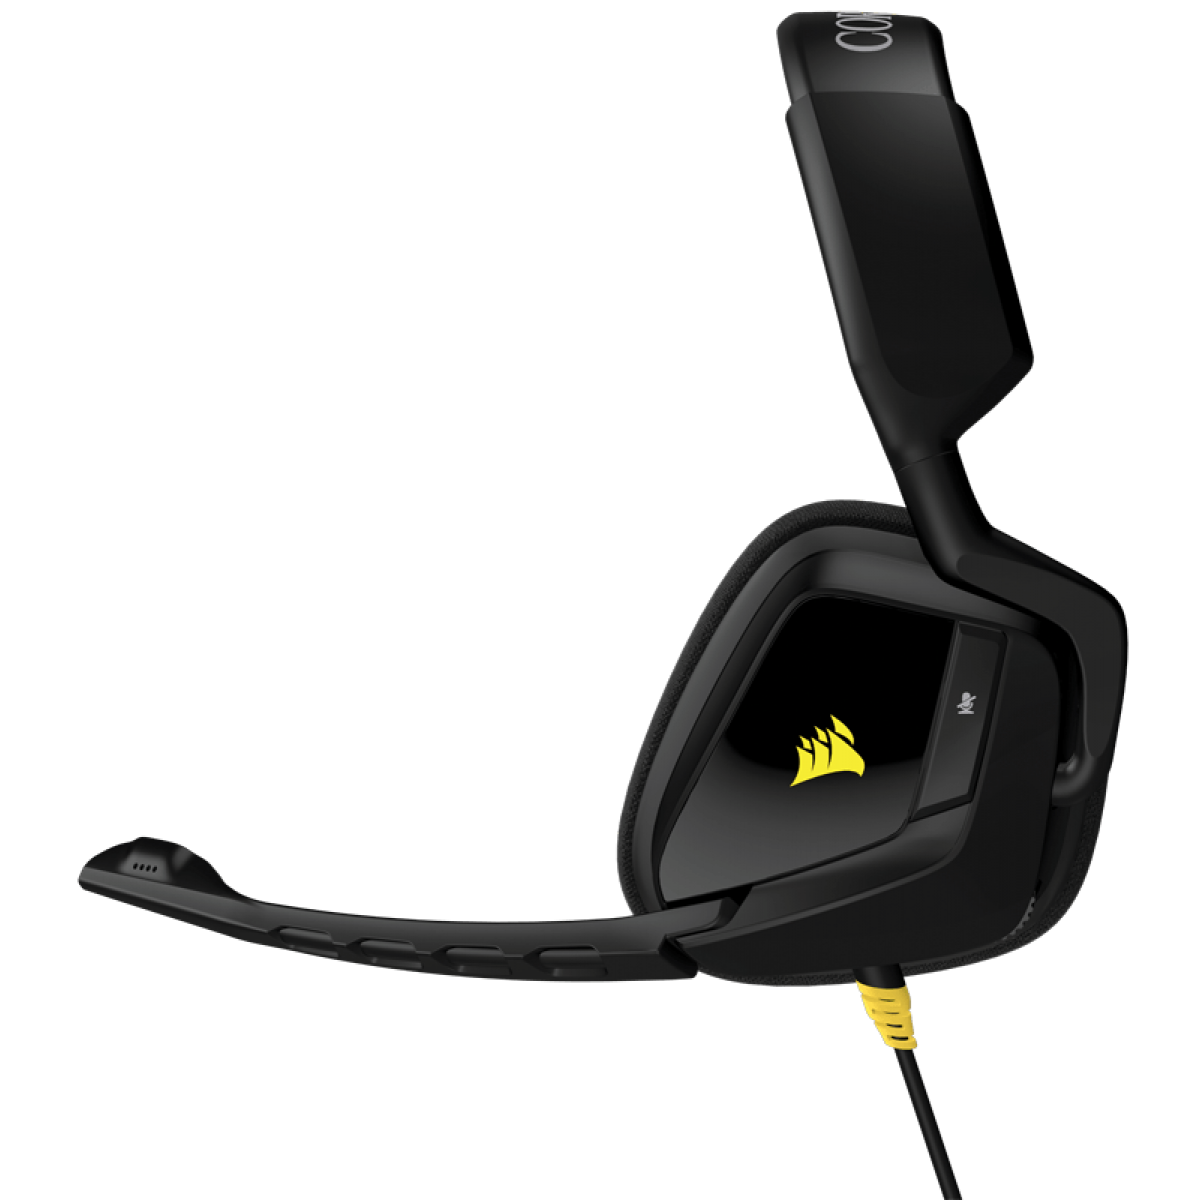 Headset Gamer Corsair Void 2.0 Stereo Yellow/Black CA-9011131-NA